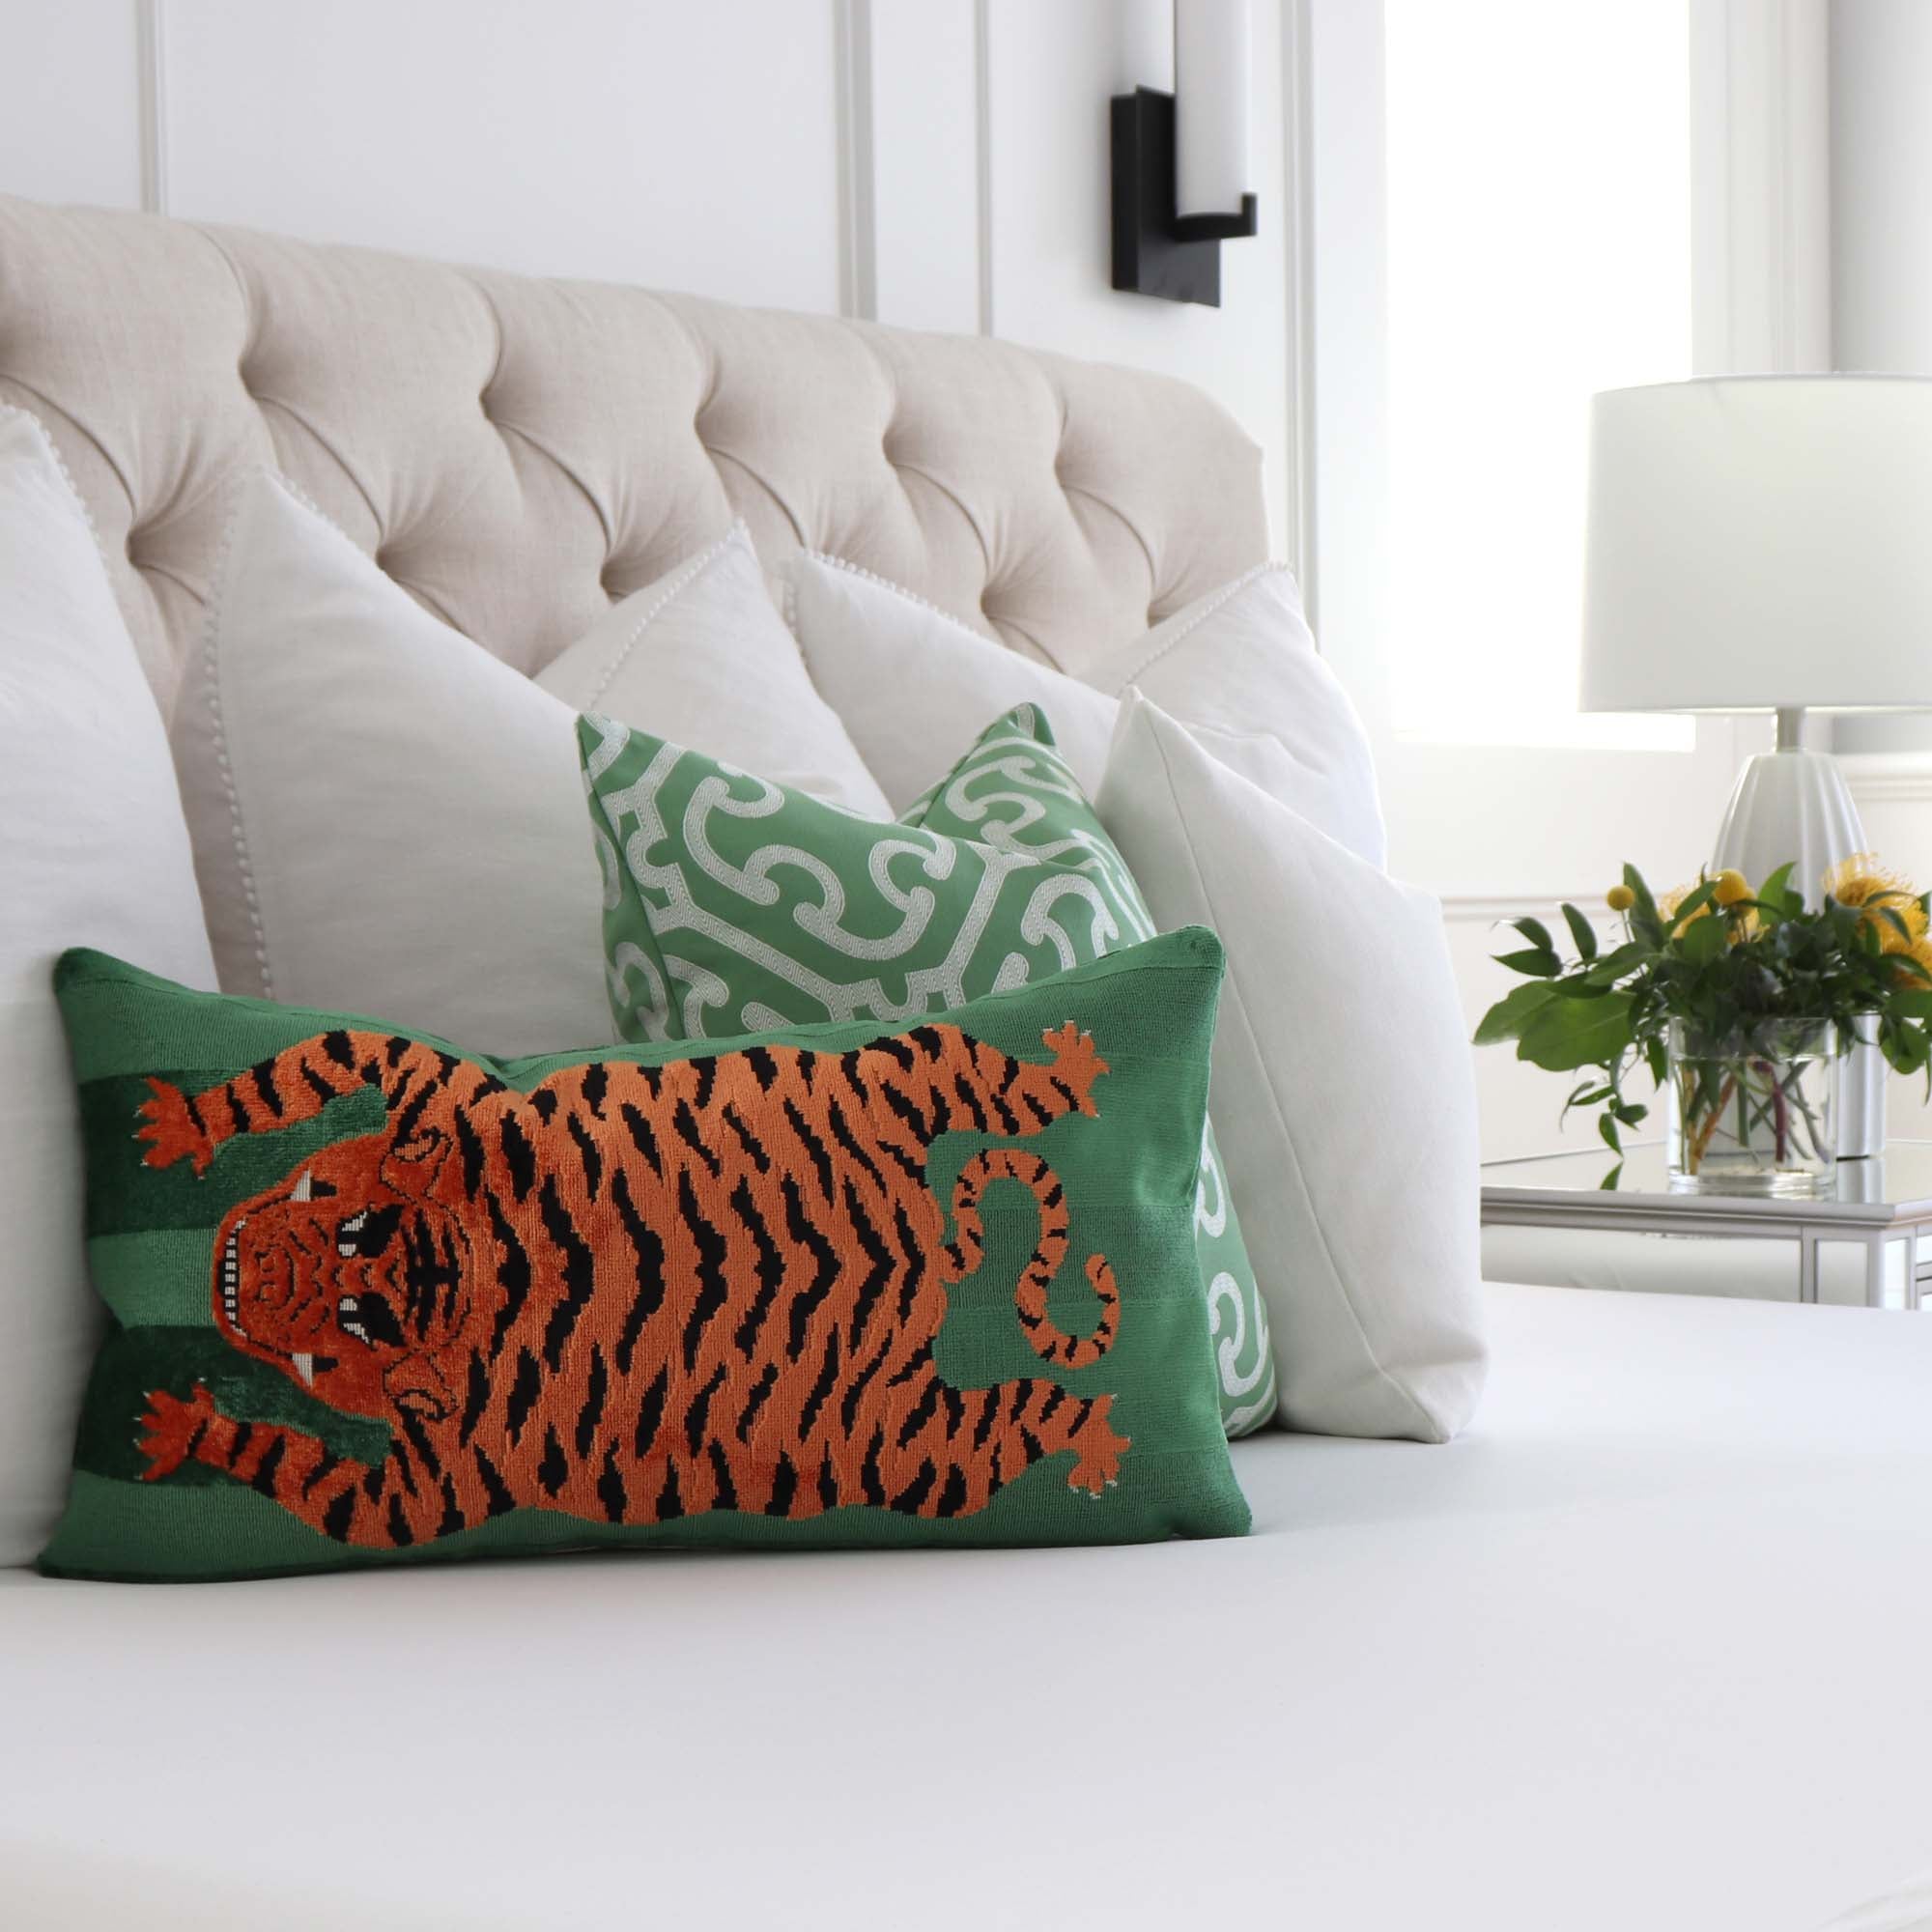 Schumacher Jokhang Tiger Velvet Green Luxury Designer Throw Pillow Cover